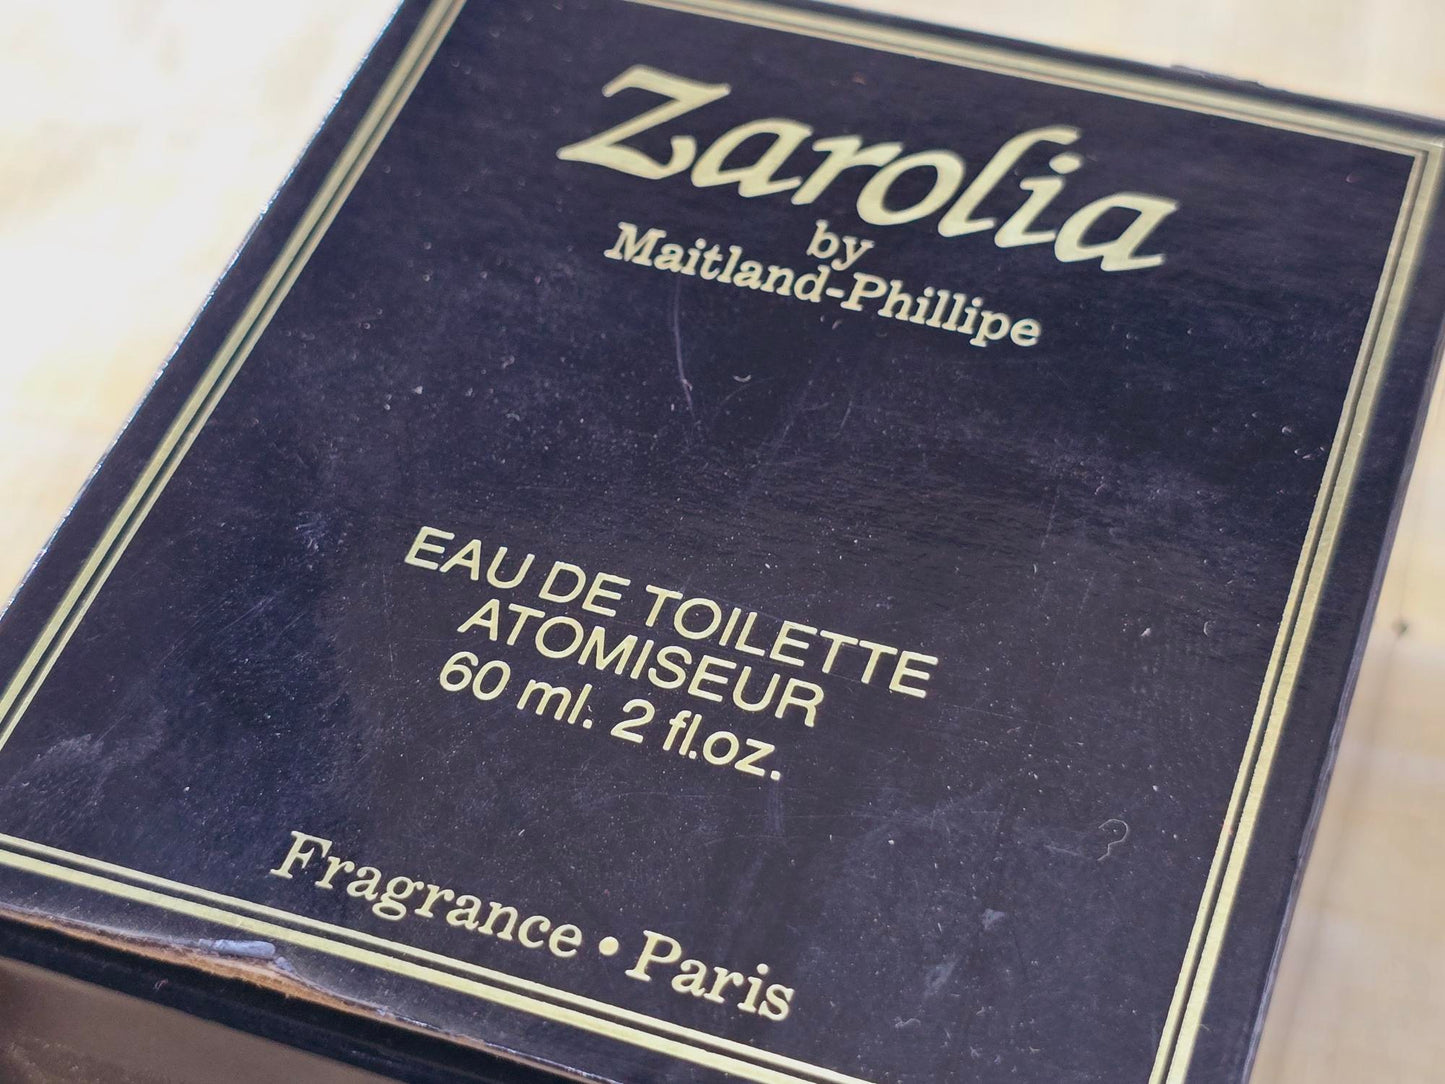 Zarolia Maitland-Phillipe for women EDT Spray 60 ml 2 oz, Vintage, Rare